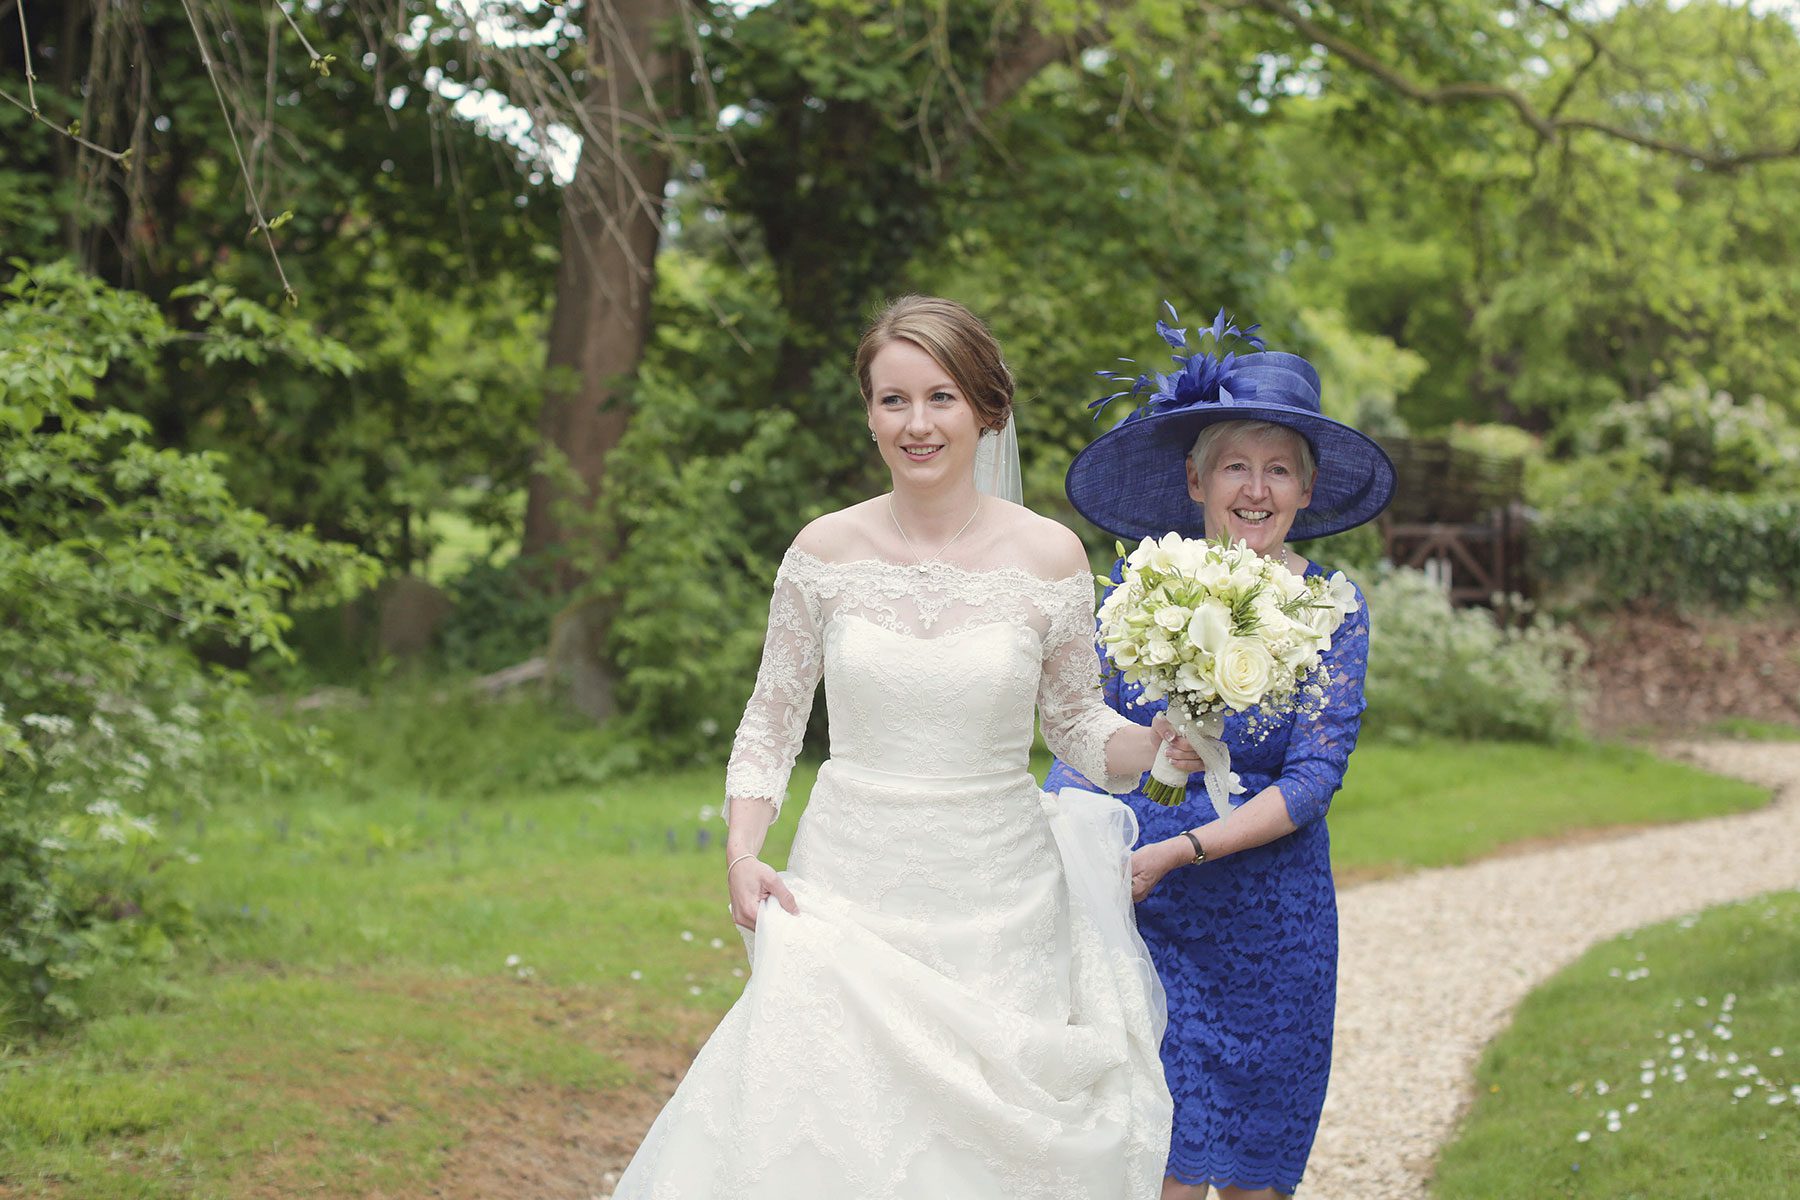 Just arrived - Wedding Photographer at Dumbleton Hall | Bullit - Cheltenham & Cotswolds